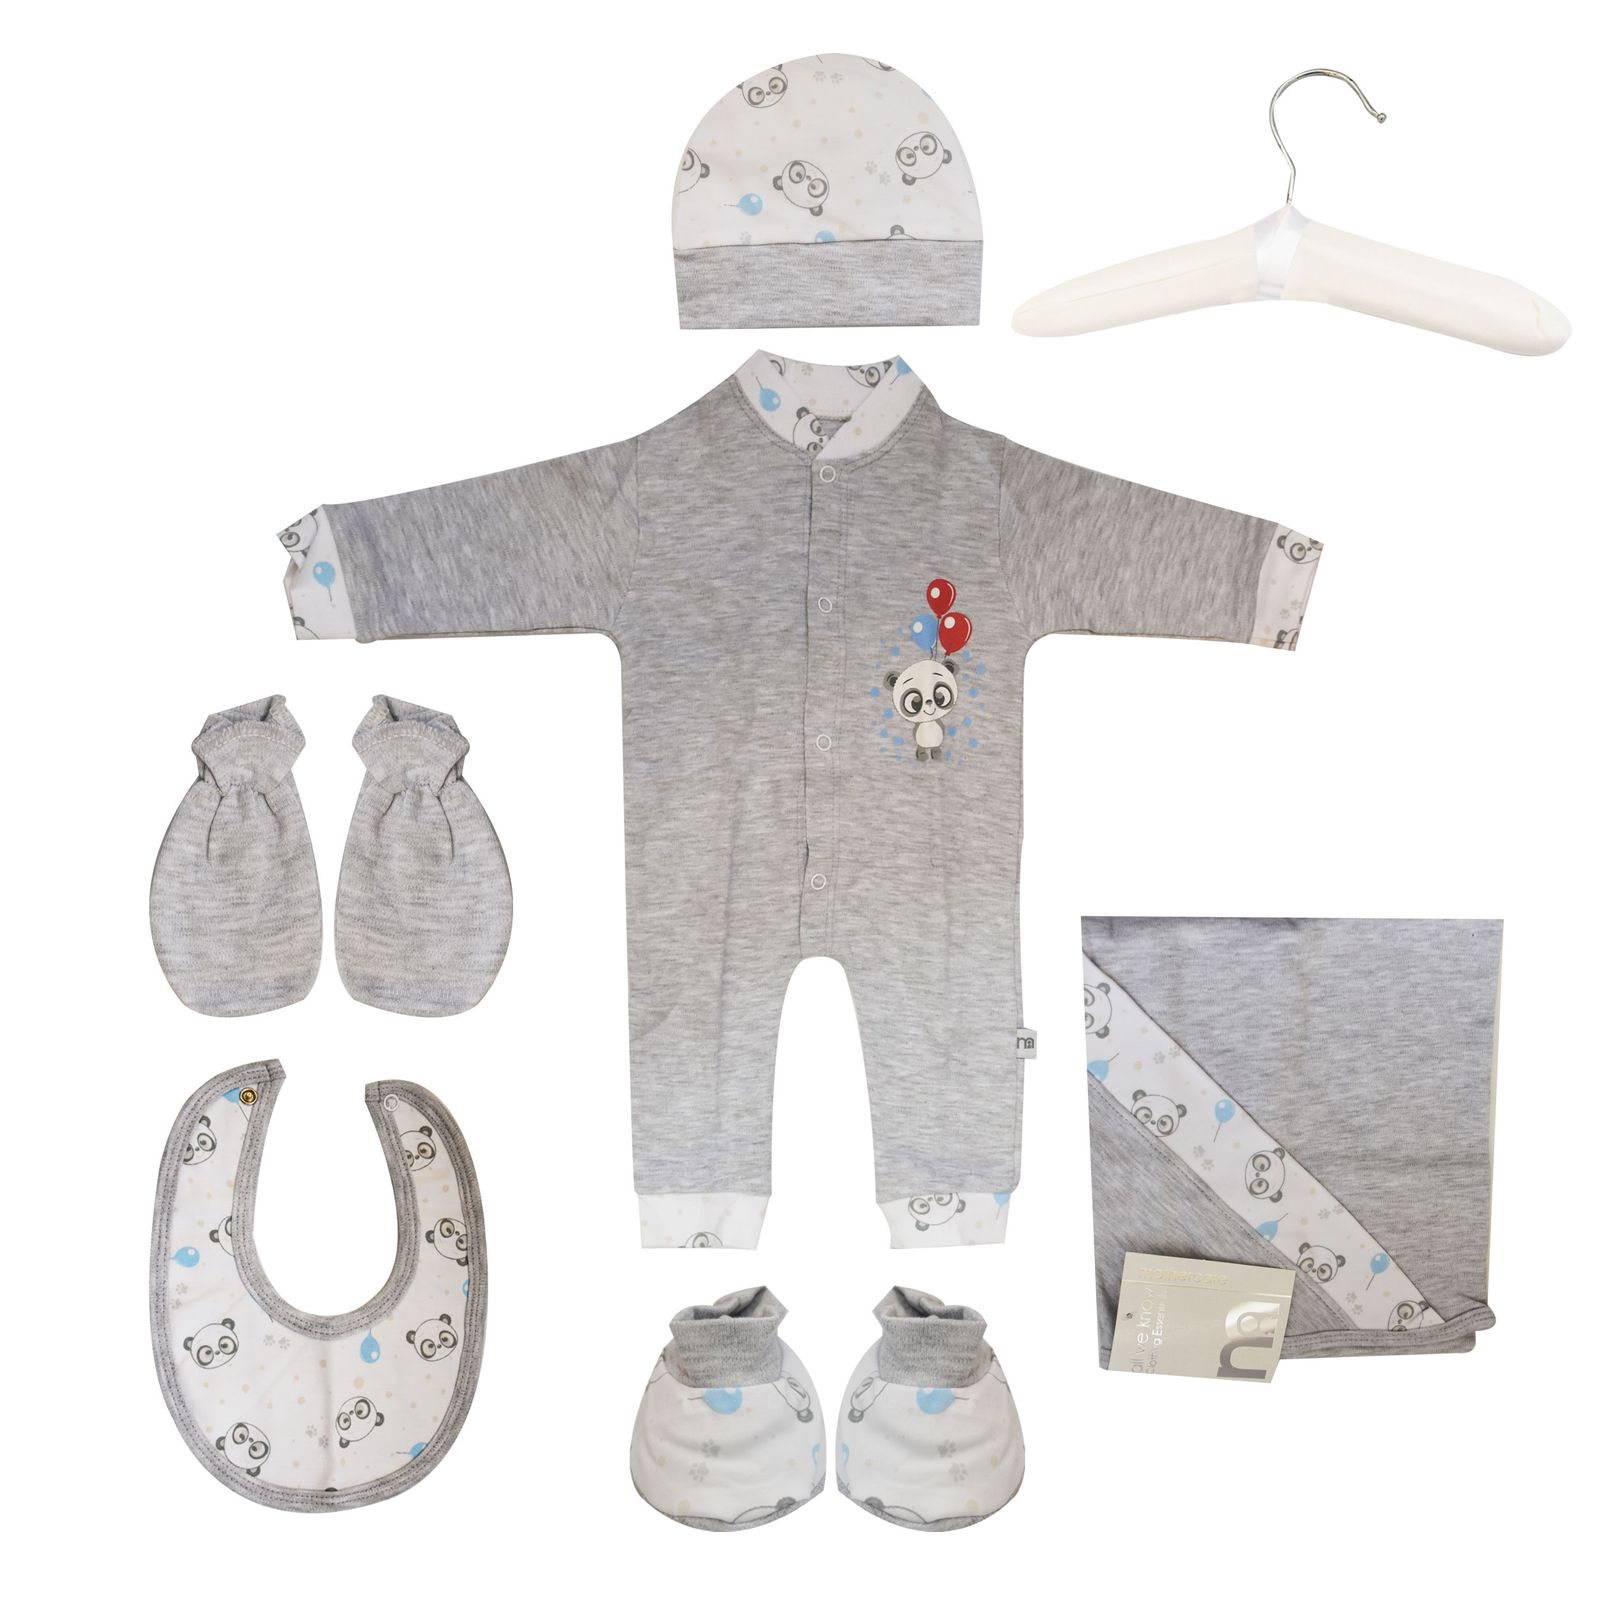  ست 7 تکه لباس نوزادی مادرکر طرح پاندا کد M454.13 -  - 9